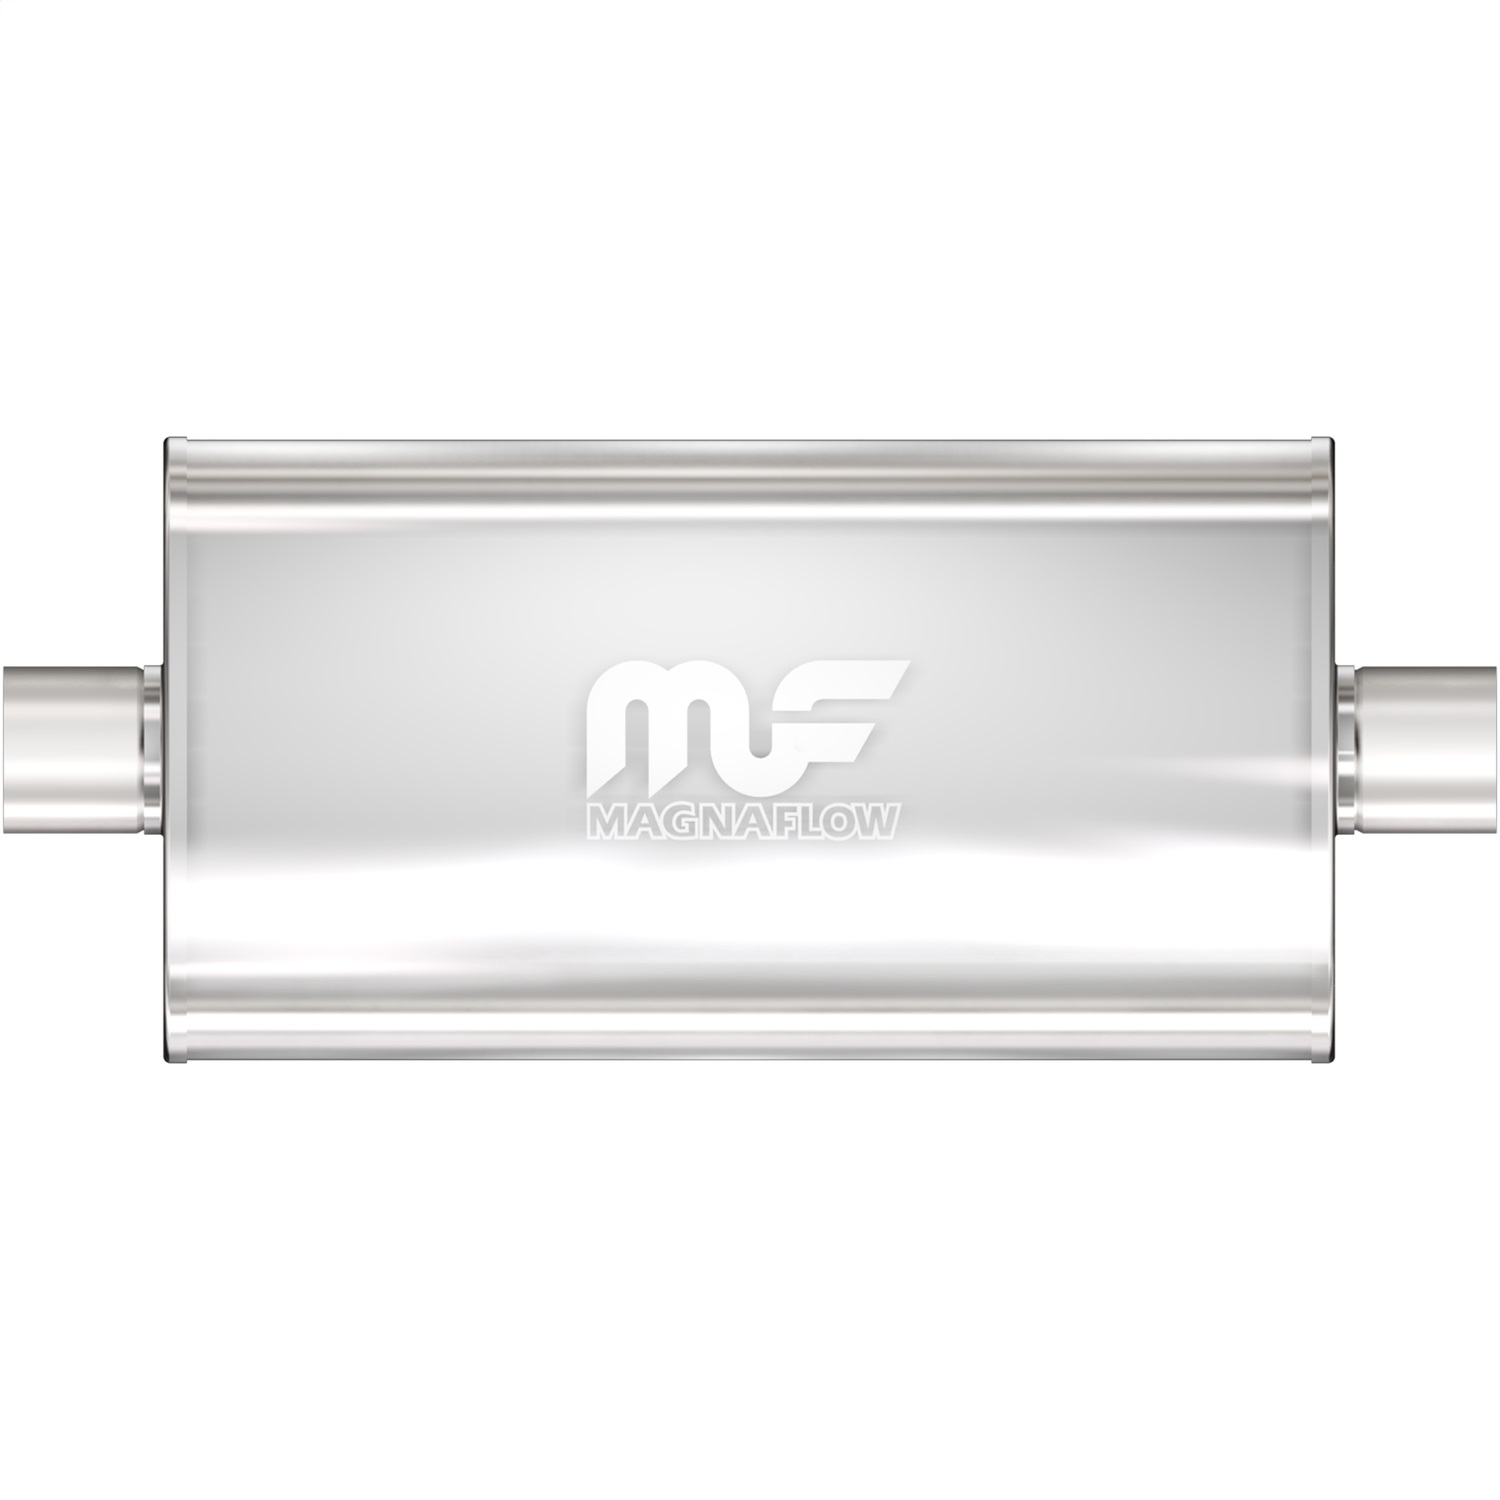 Magnaflow Performance Exhaust Magnaflow Performance Exhaust 12579 Stainless Steel Muffler